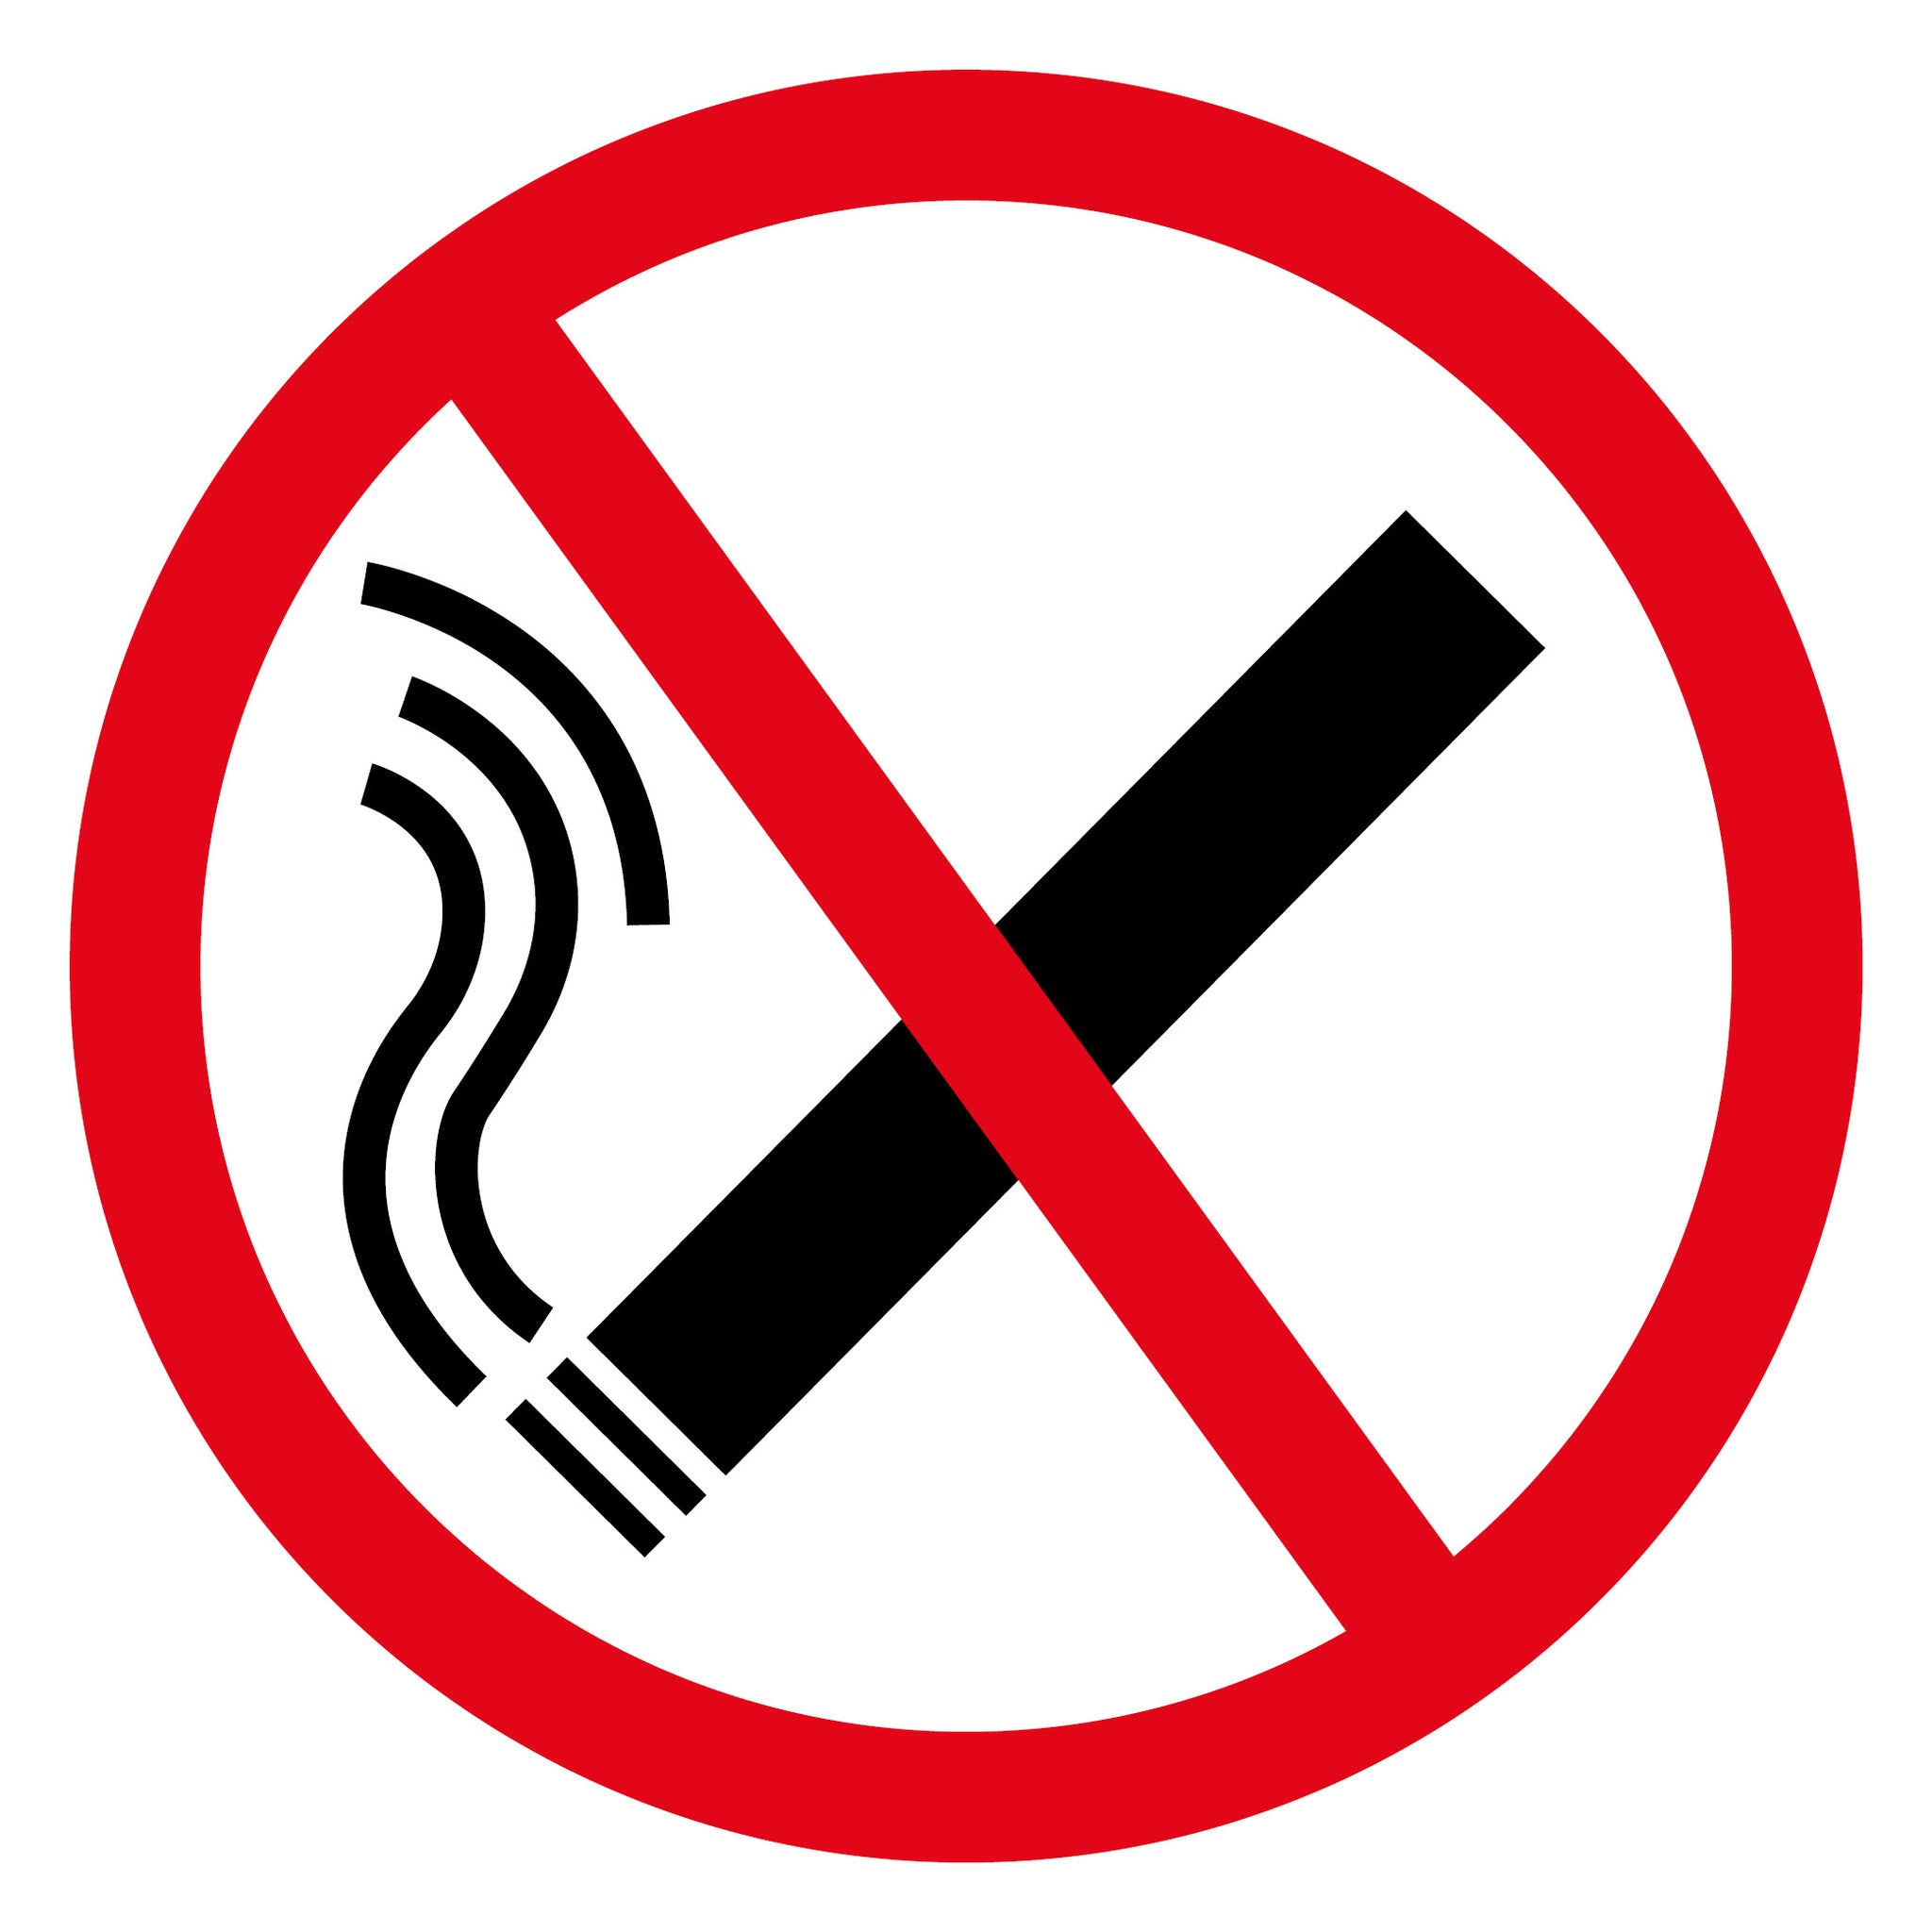 No-smoking sign